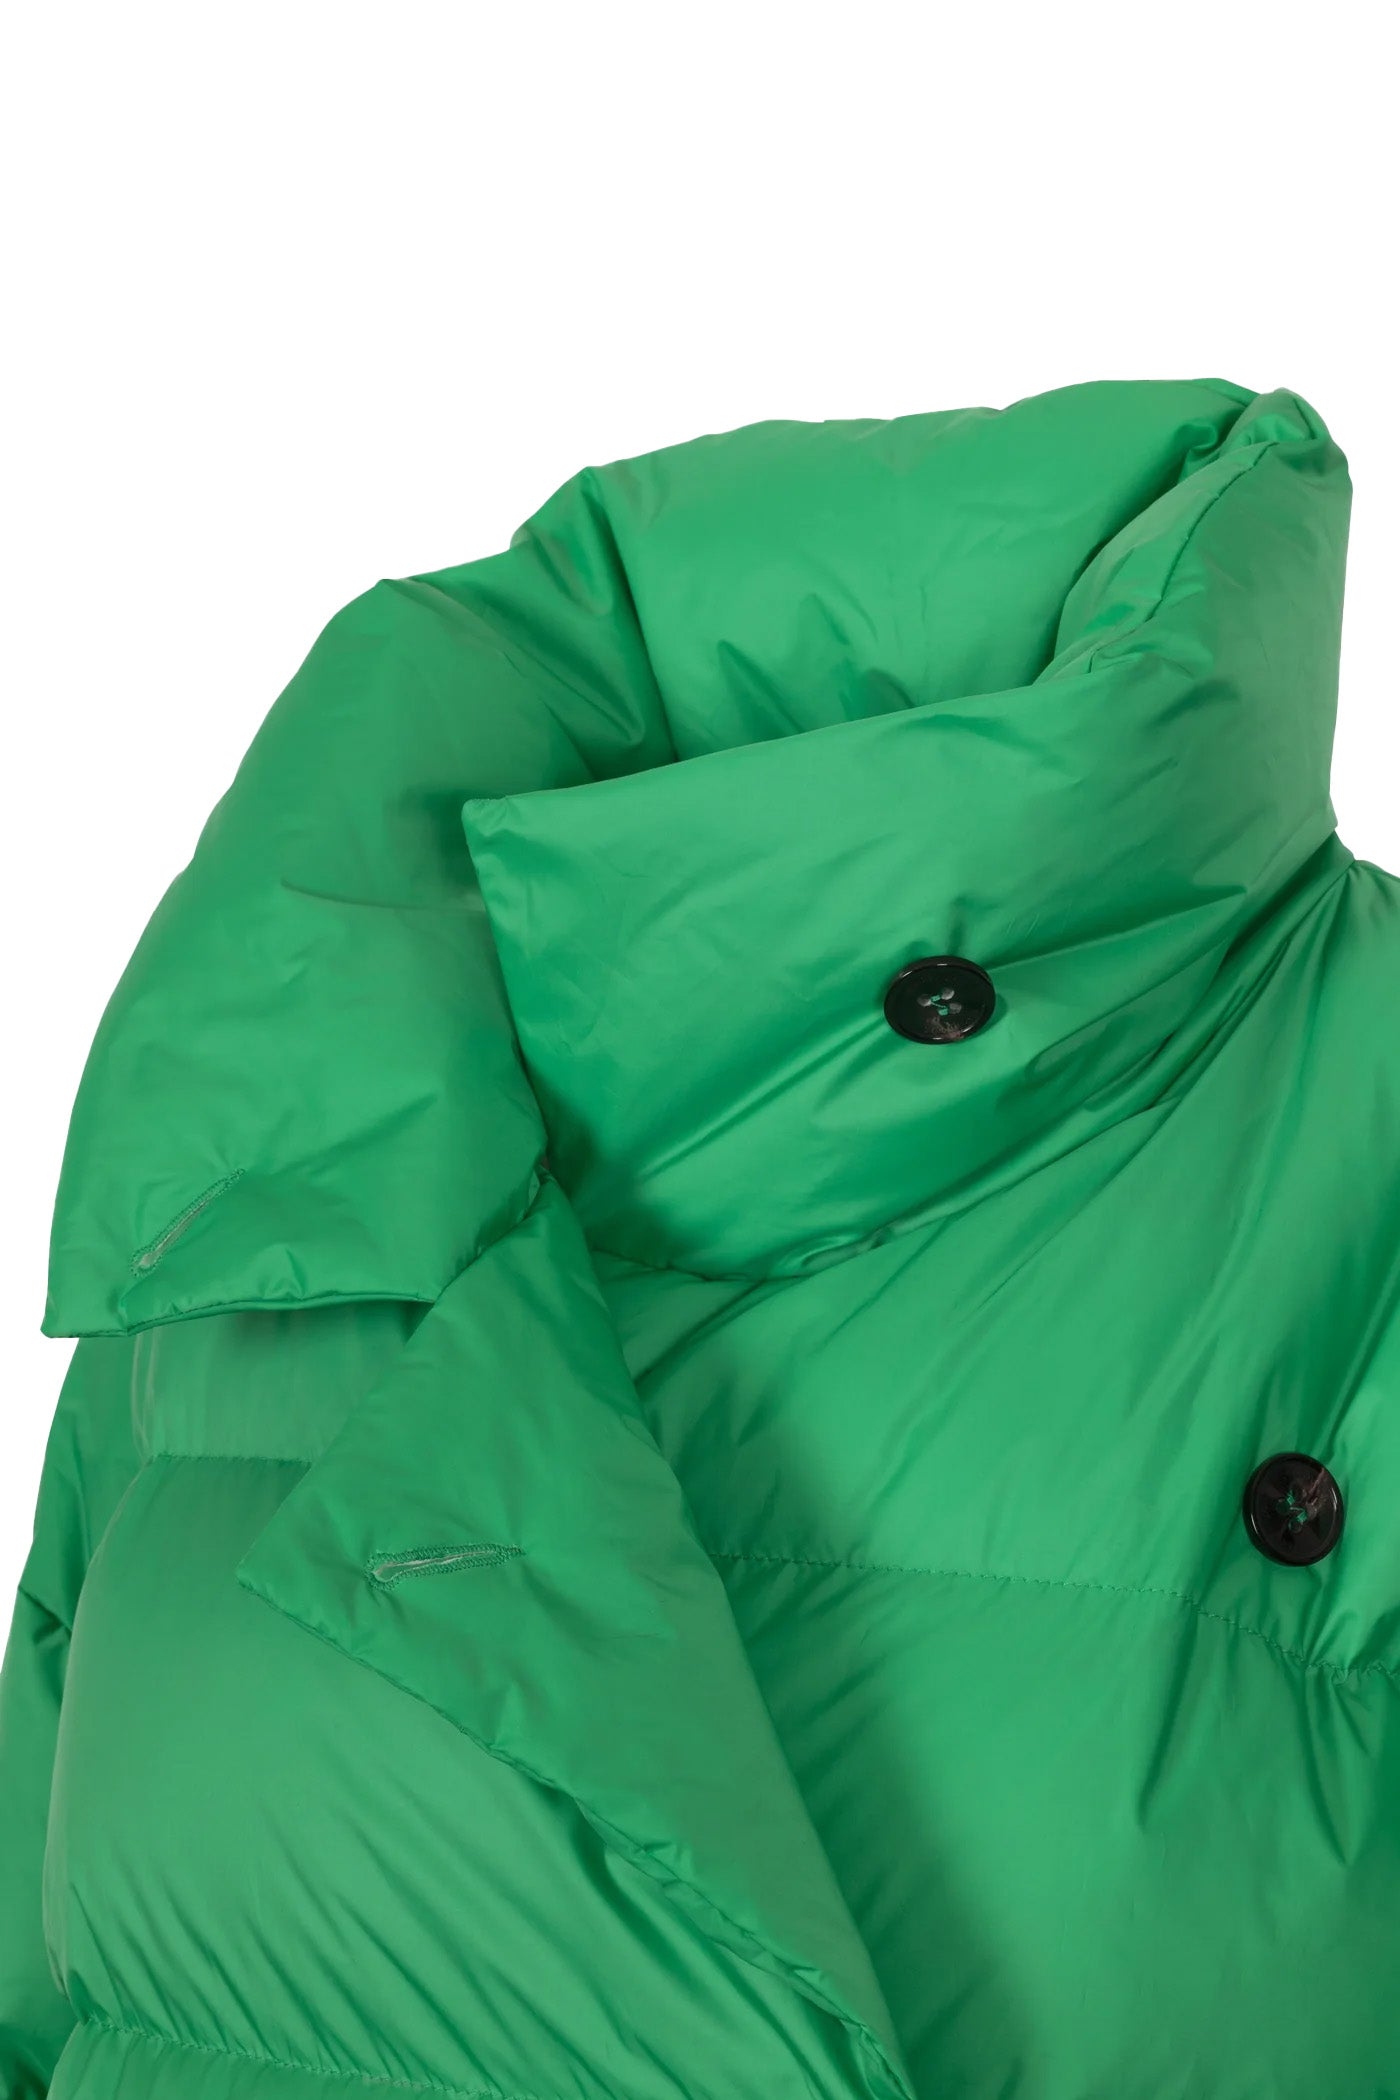 Oversized Lempelius wrap down coat in bright green